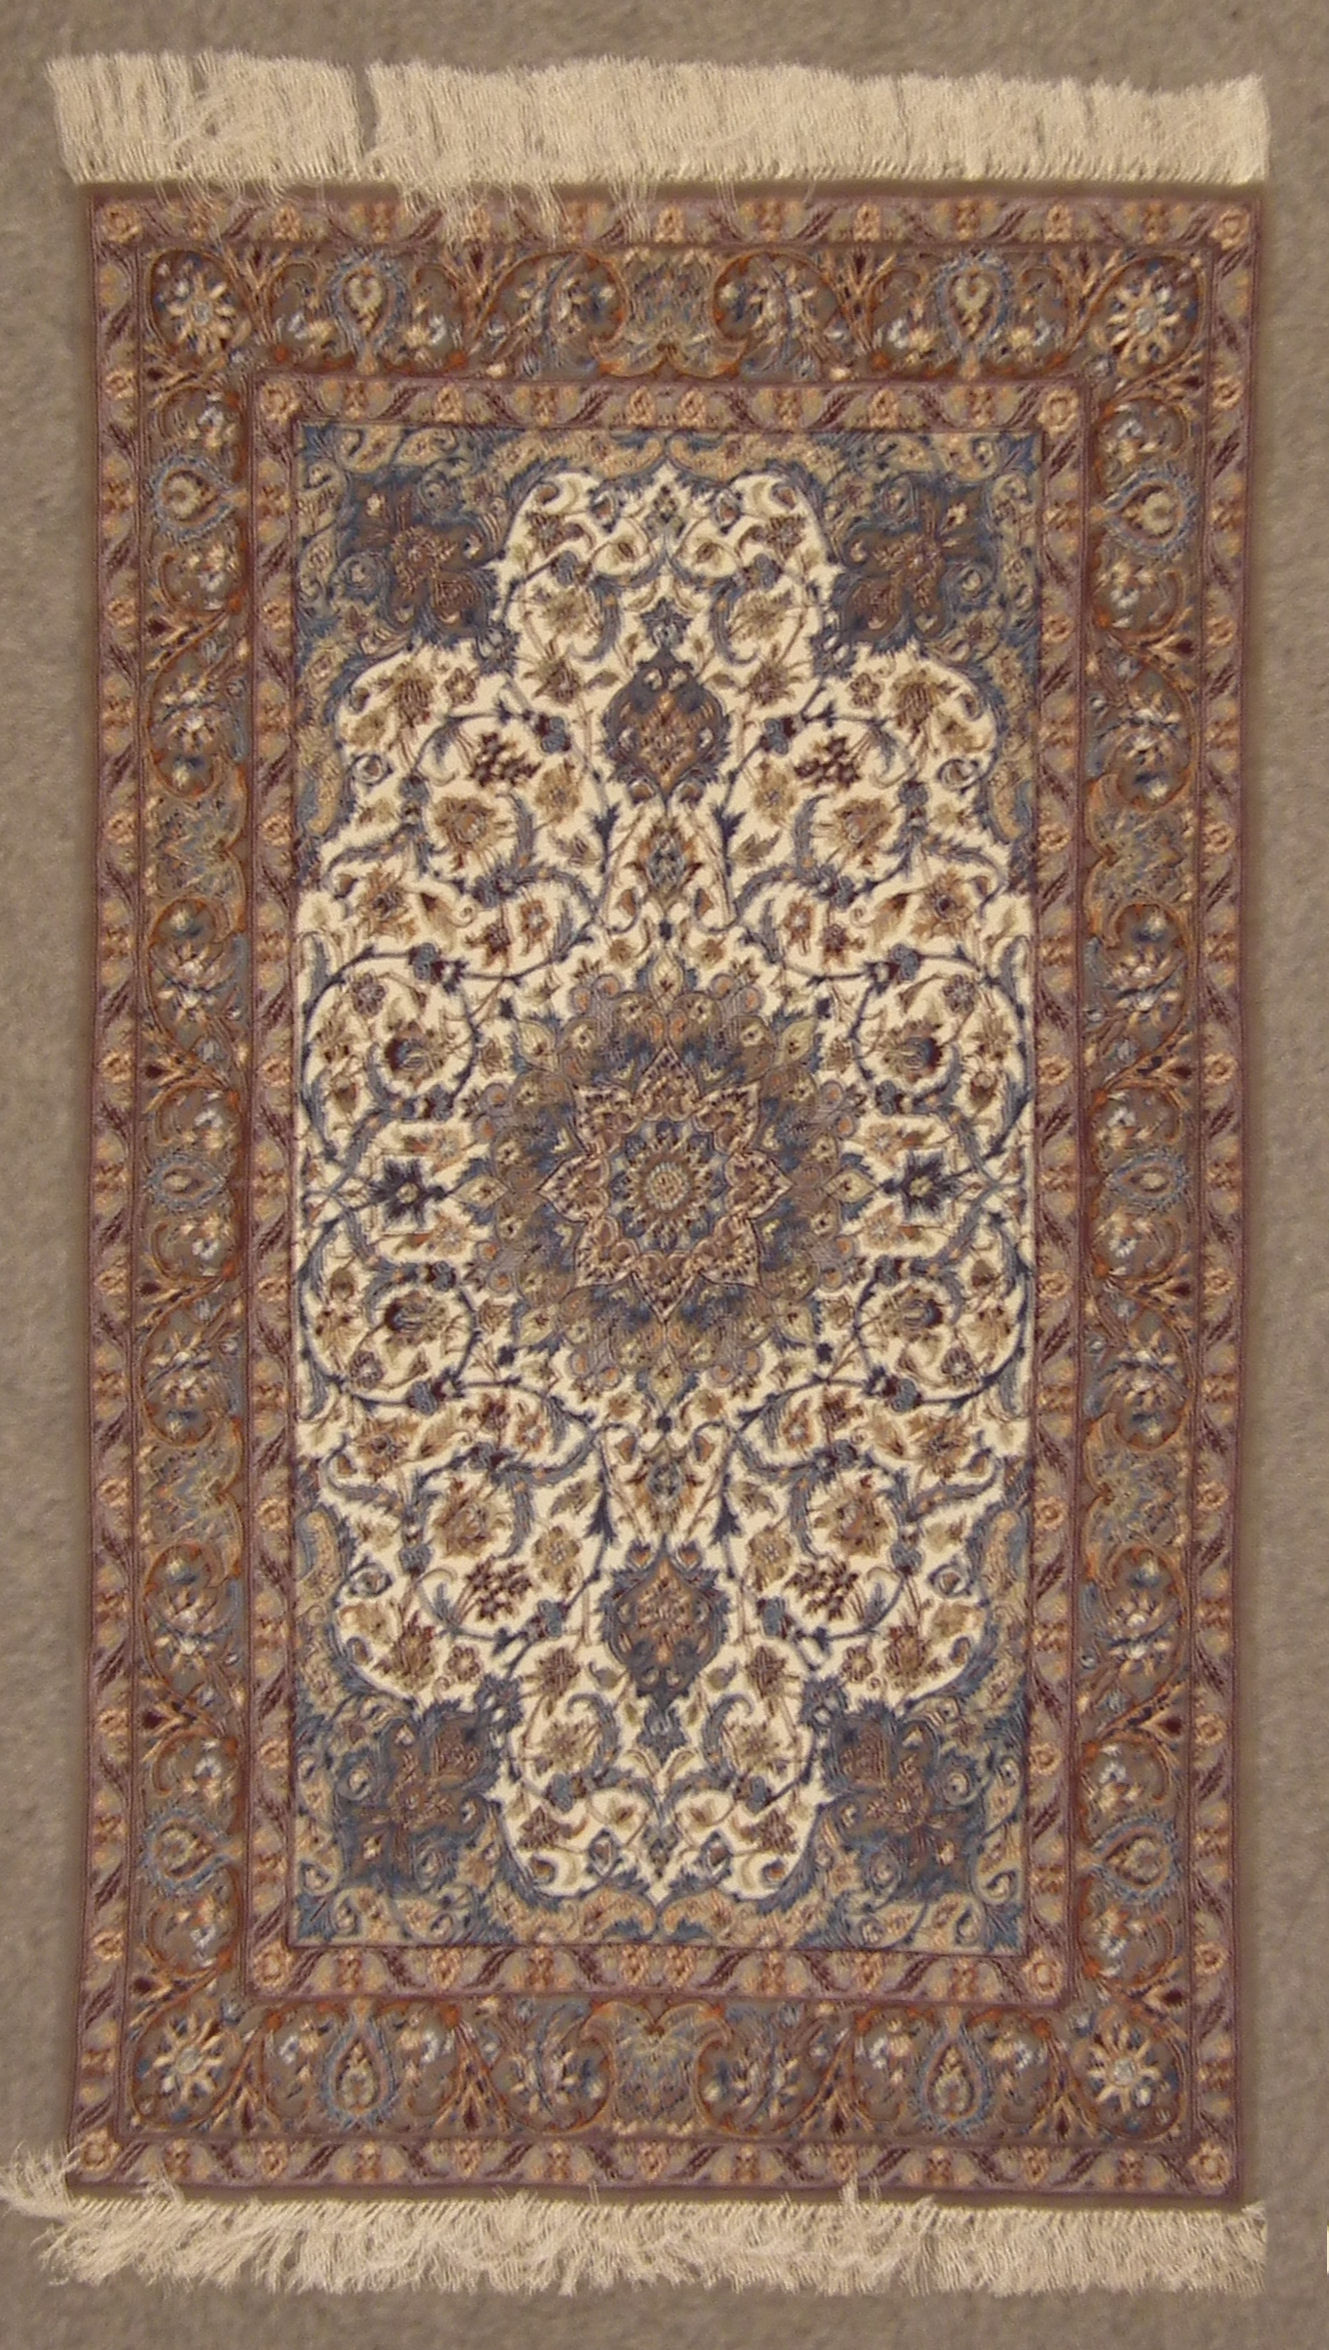 A modern rug of Isfahan design 15c1a5